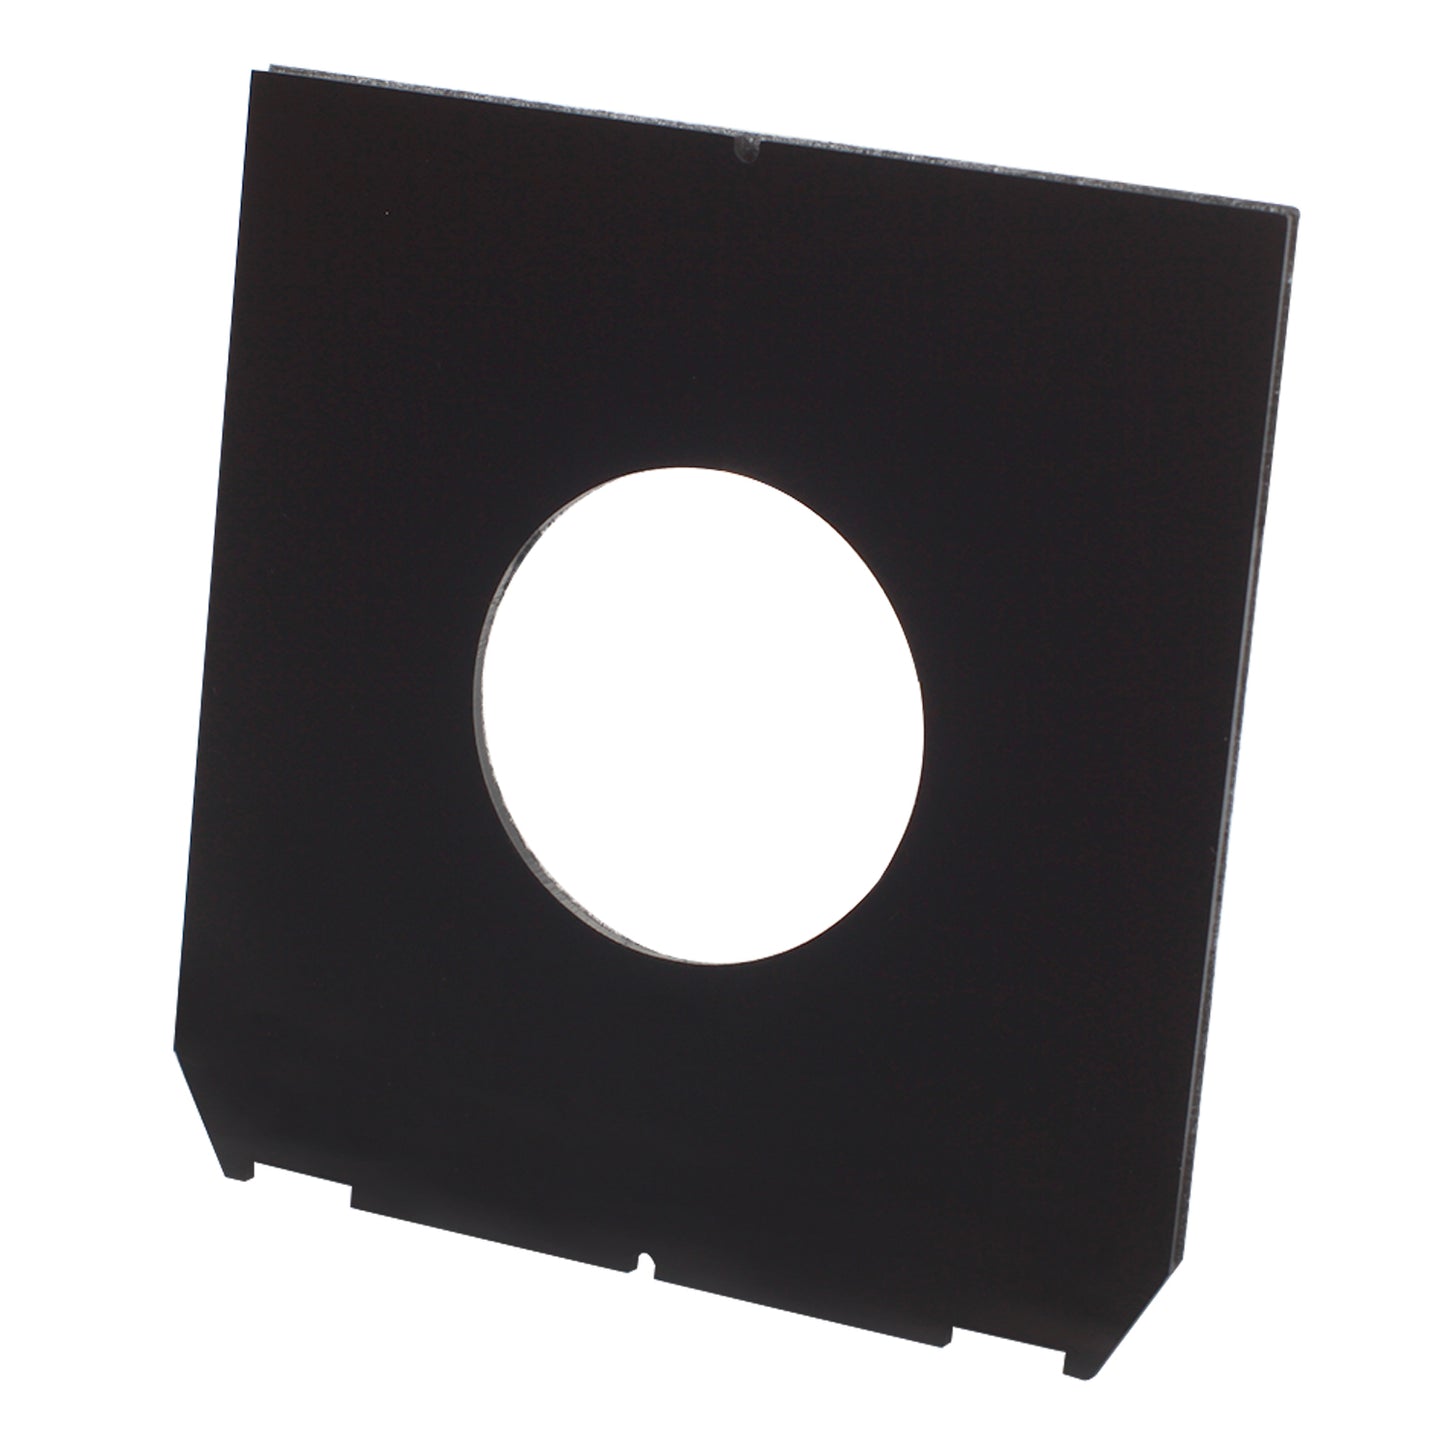 Plastic Compur Prontor Copal #1 Shutter Lens board 41.6mm Linhof Style For 4x5" Large Format Camera Lenses